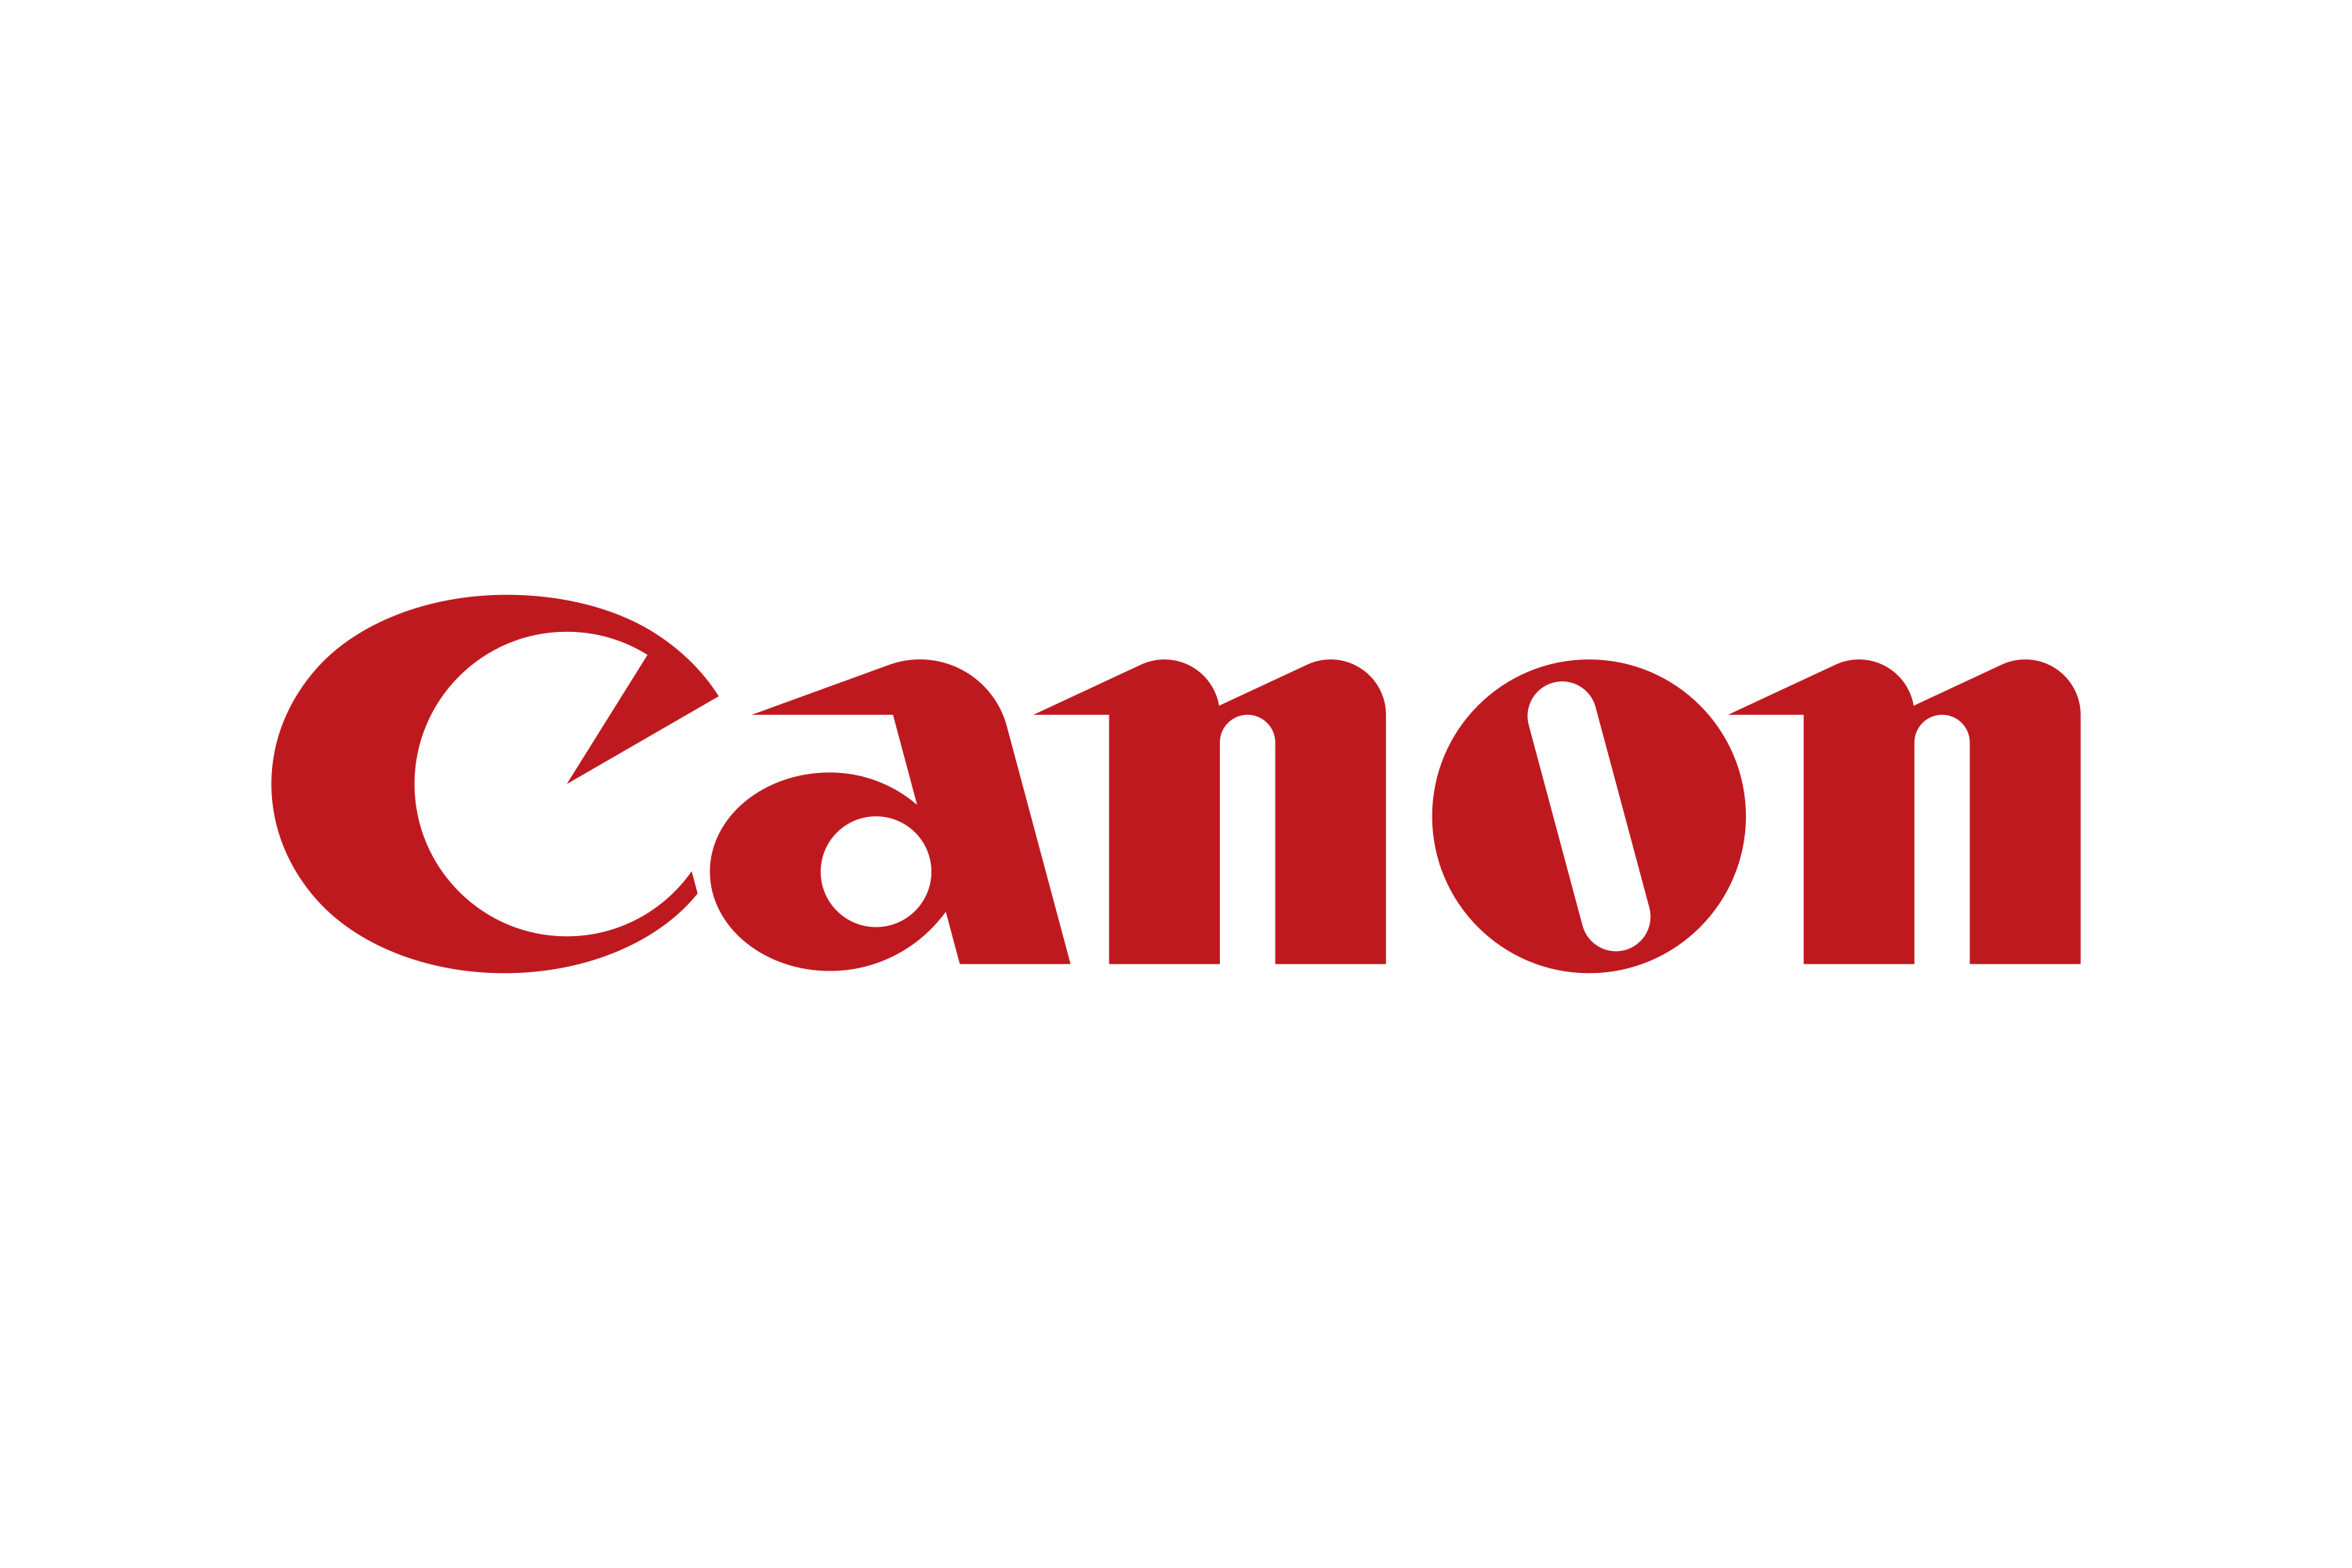 Canon Medical Systems Corporation Logo